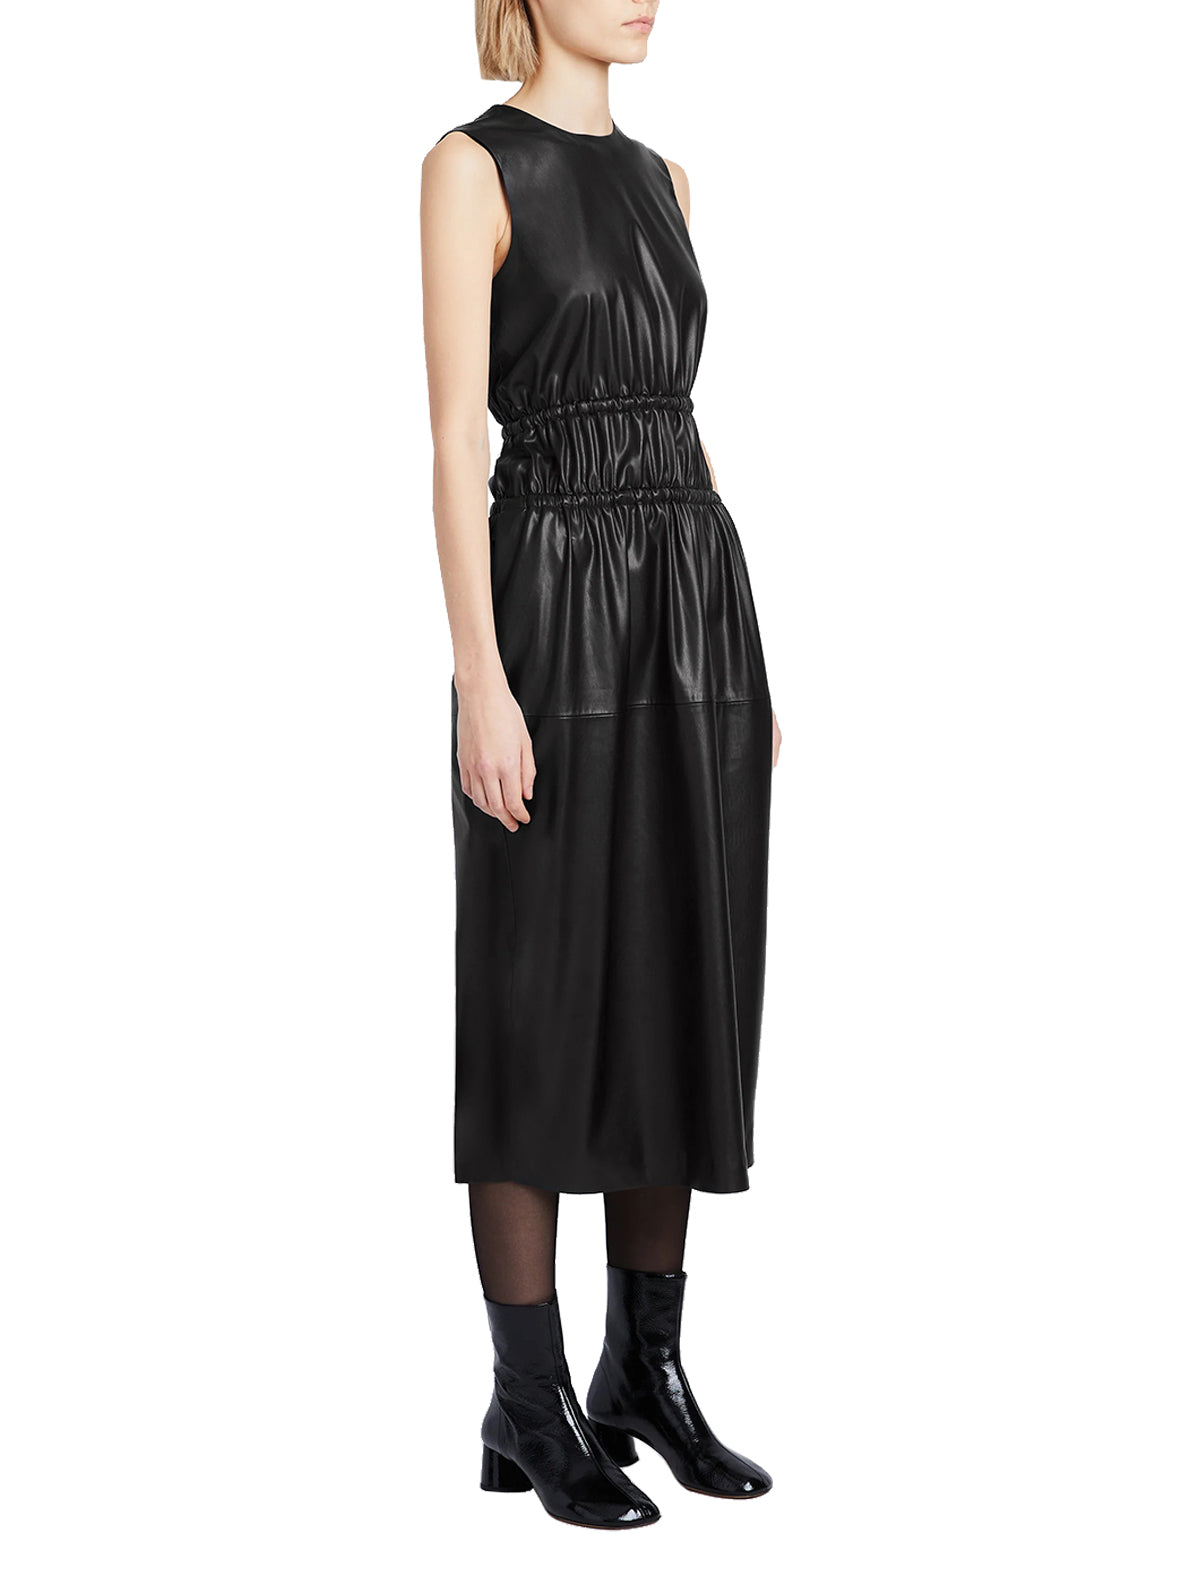 PROENZA SCHOULER WHITE LABEL Faux Leather Drawstring Dress in Black